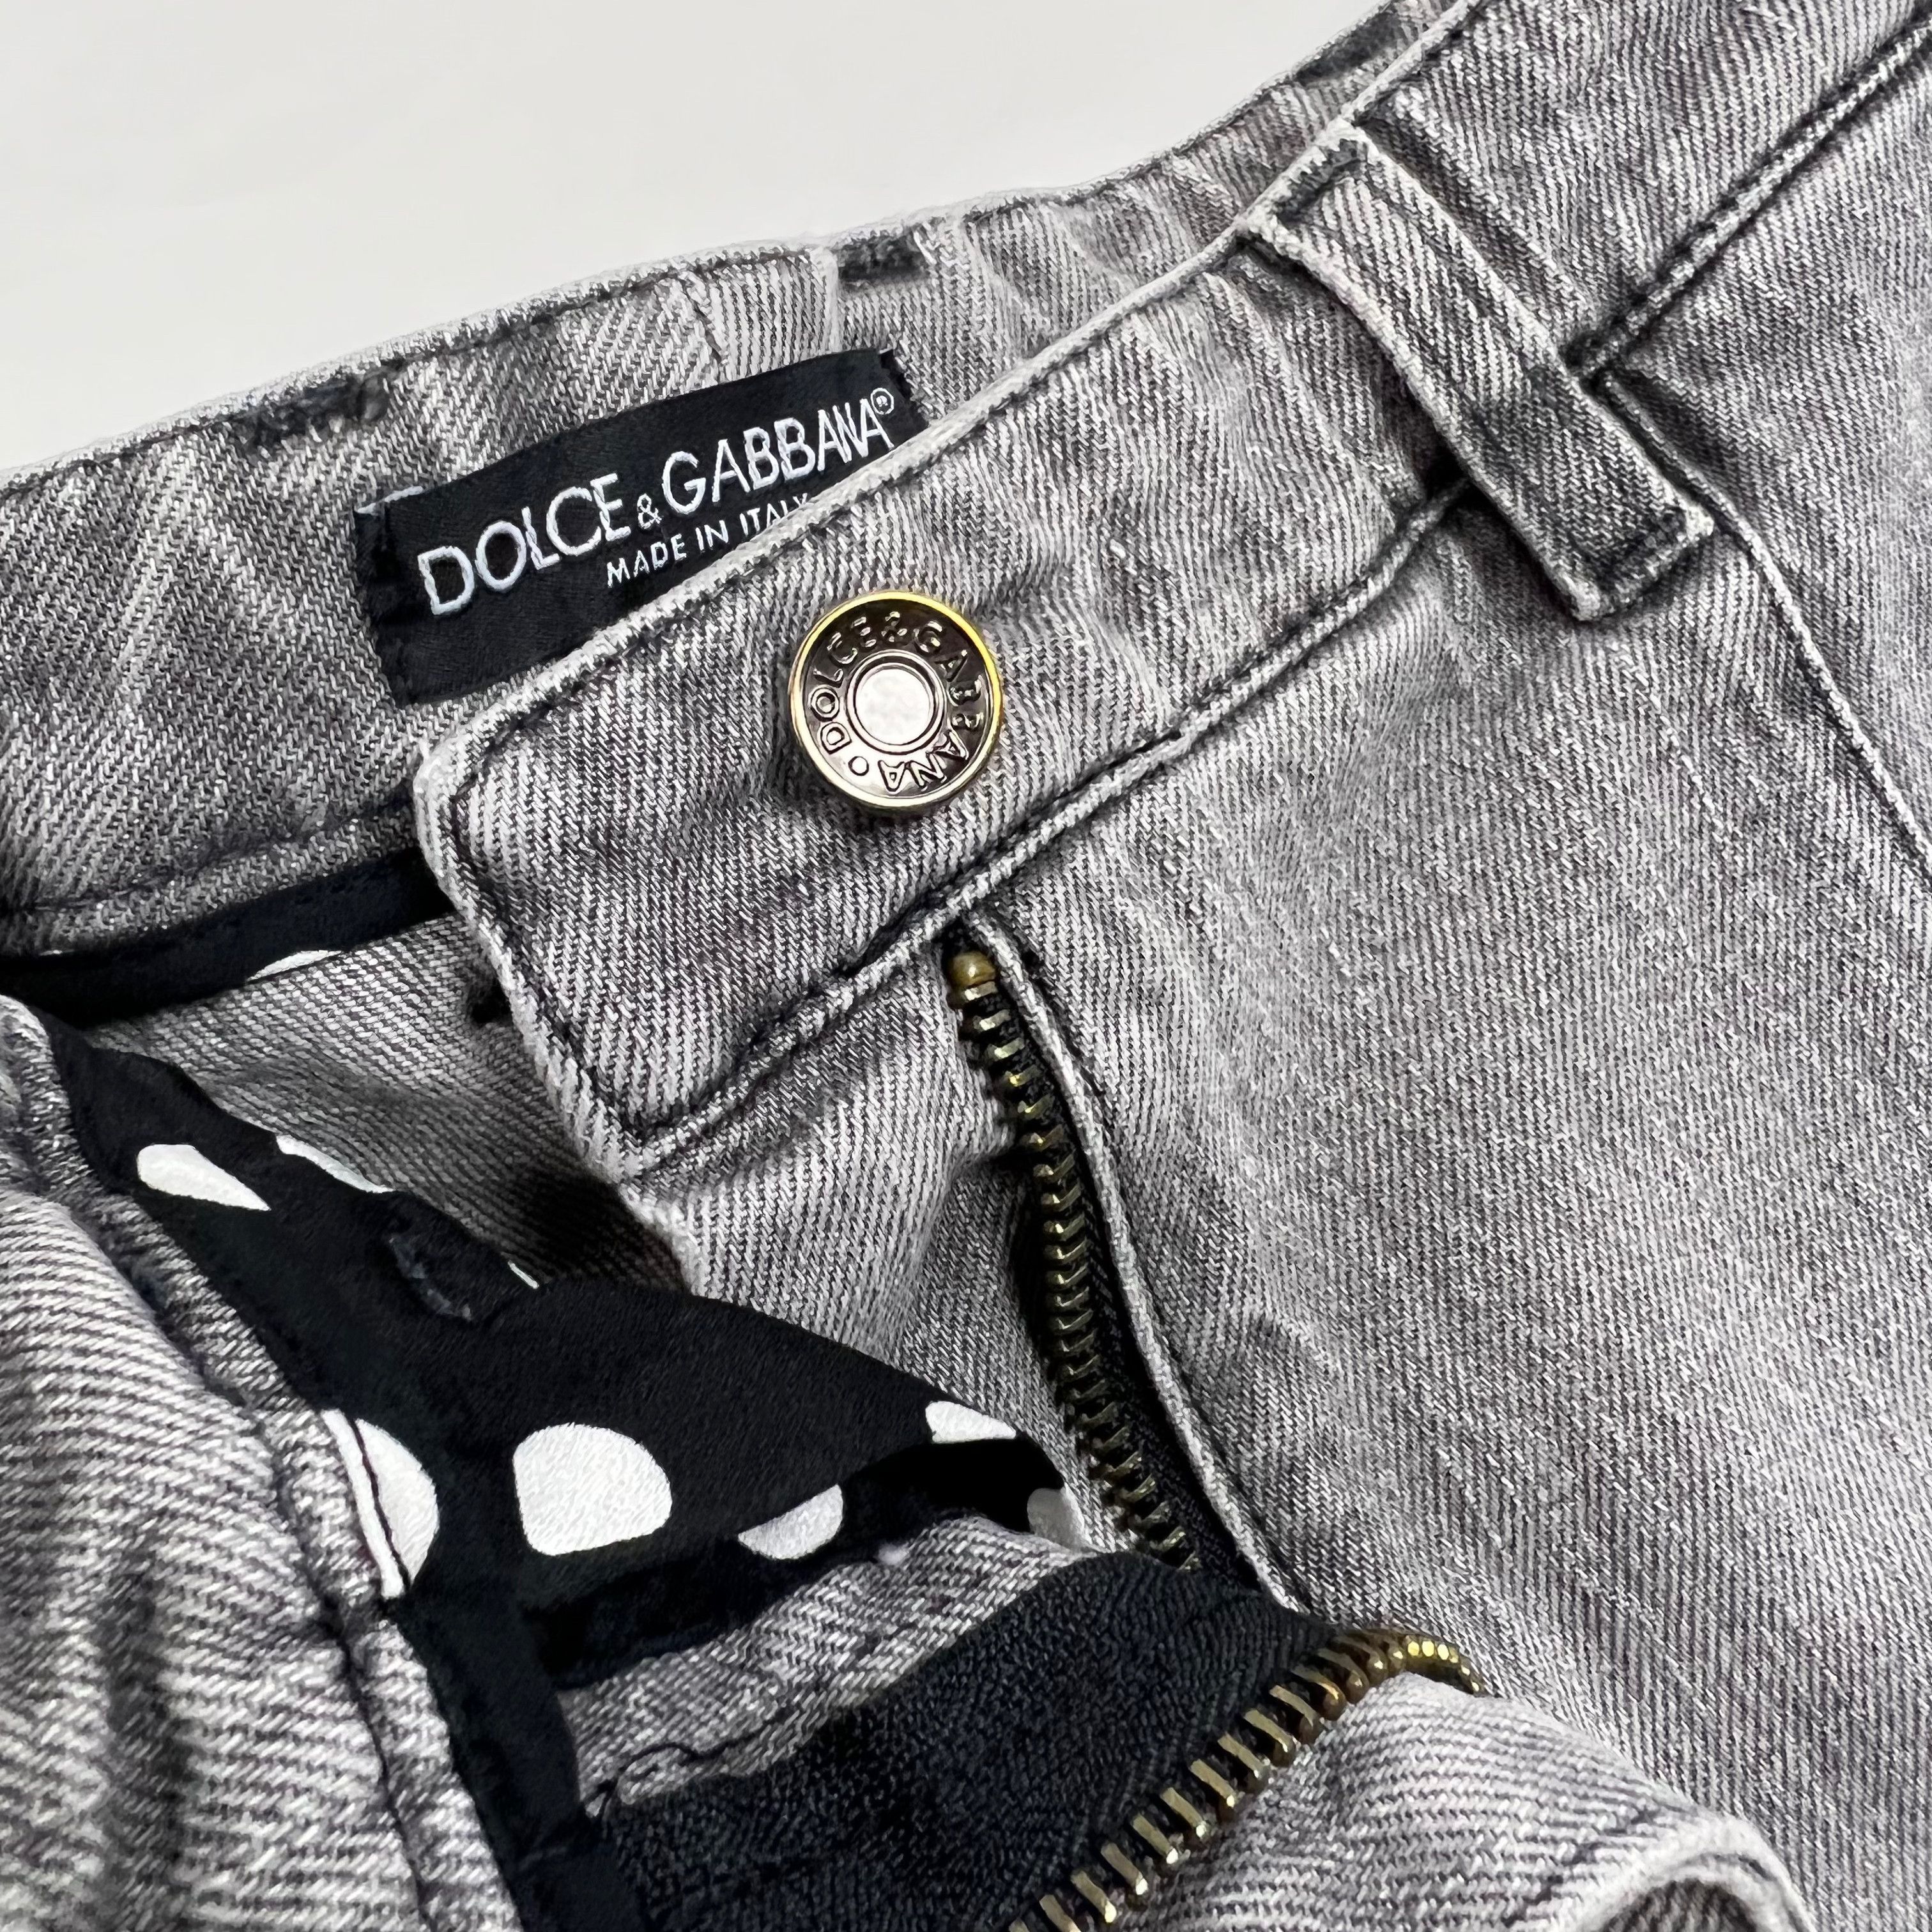 Dolce & Gabbana Dolce&Gabbana High Waisted Shorts Light Grey SZ 24" (IT 38) Size 24" / US 00 / IT 34 - 3 Thumbnail